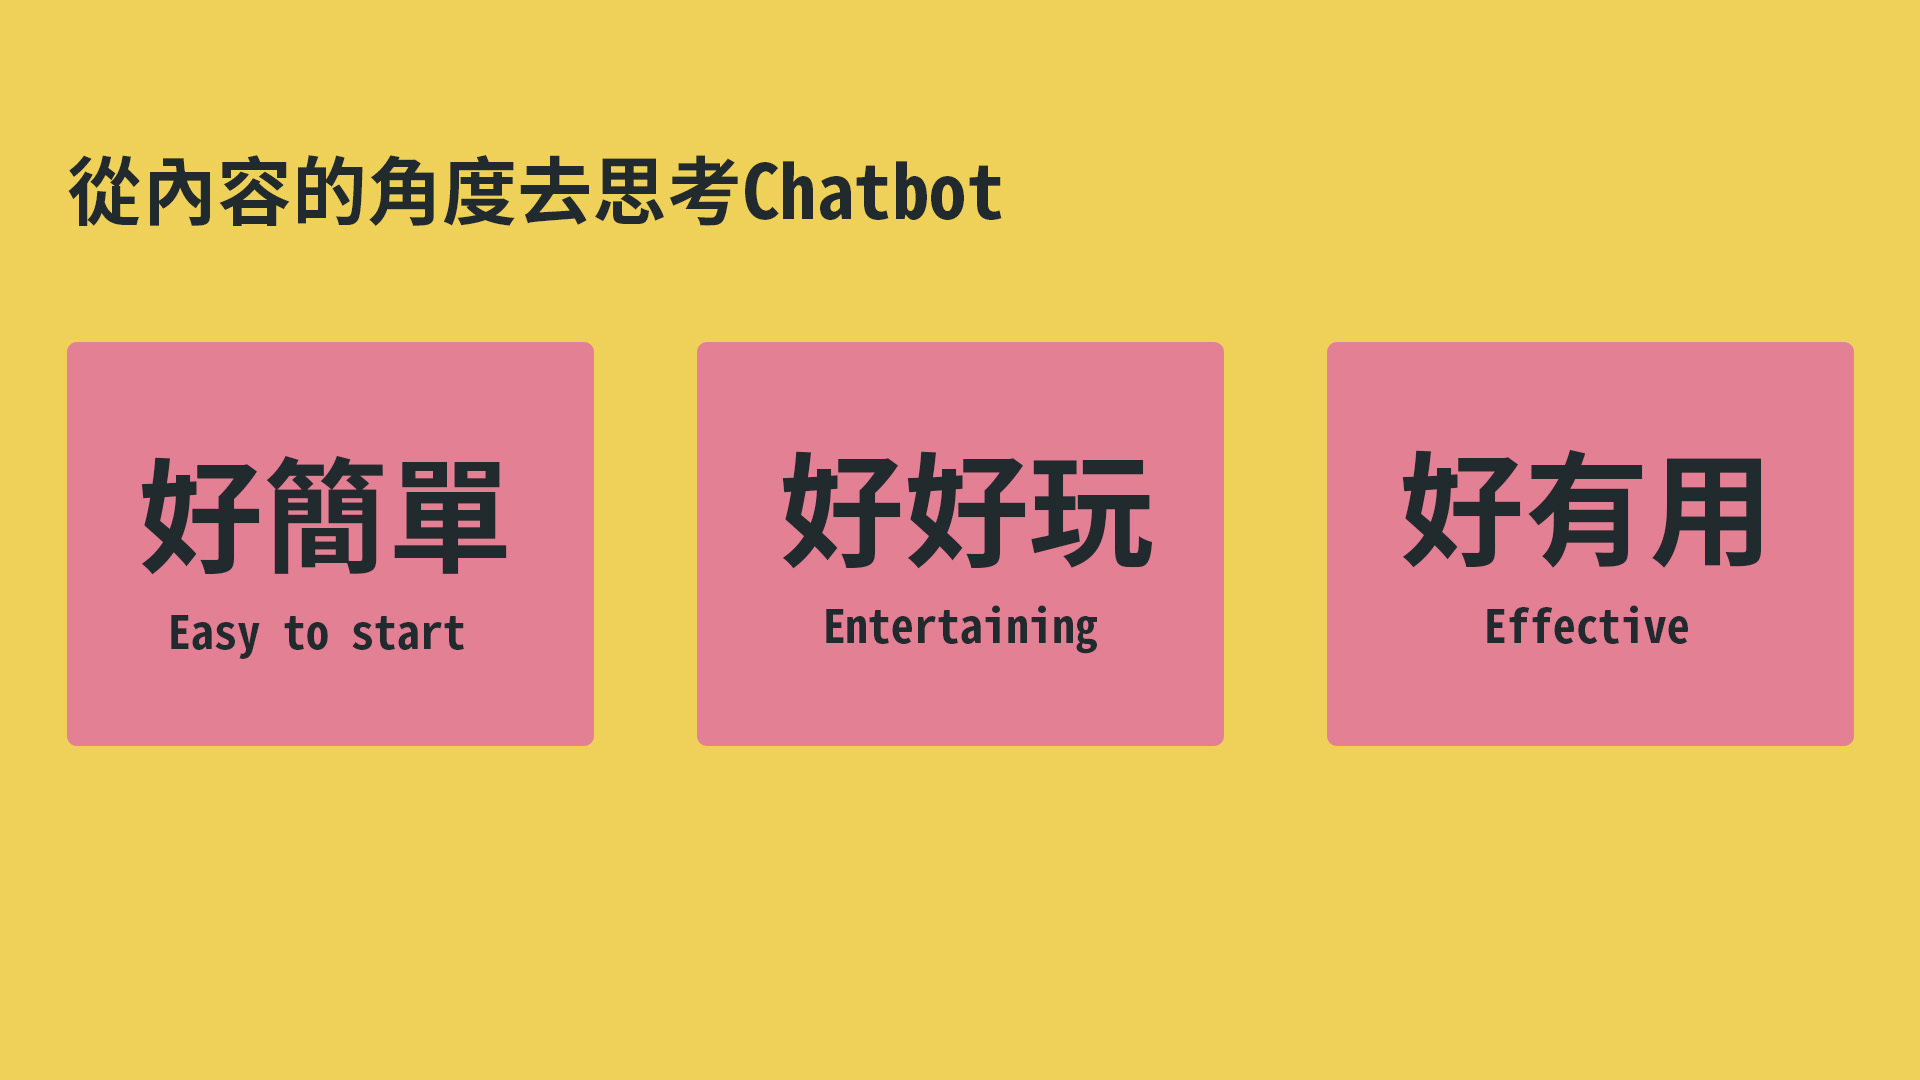 Chatbot 聊天機器人正夯！大大學院公開幕後獨家觀察！